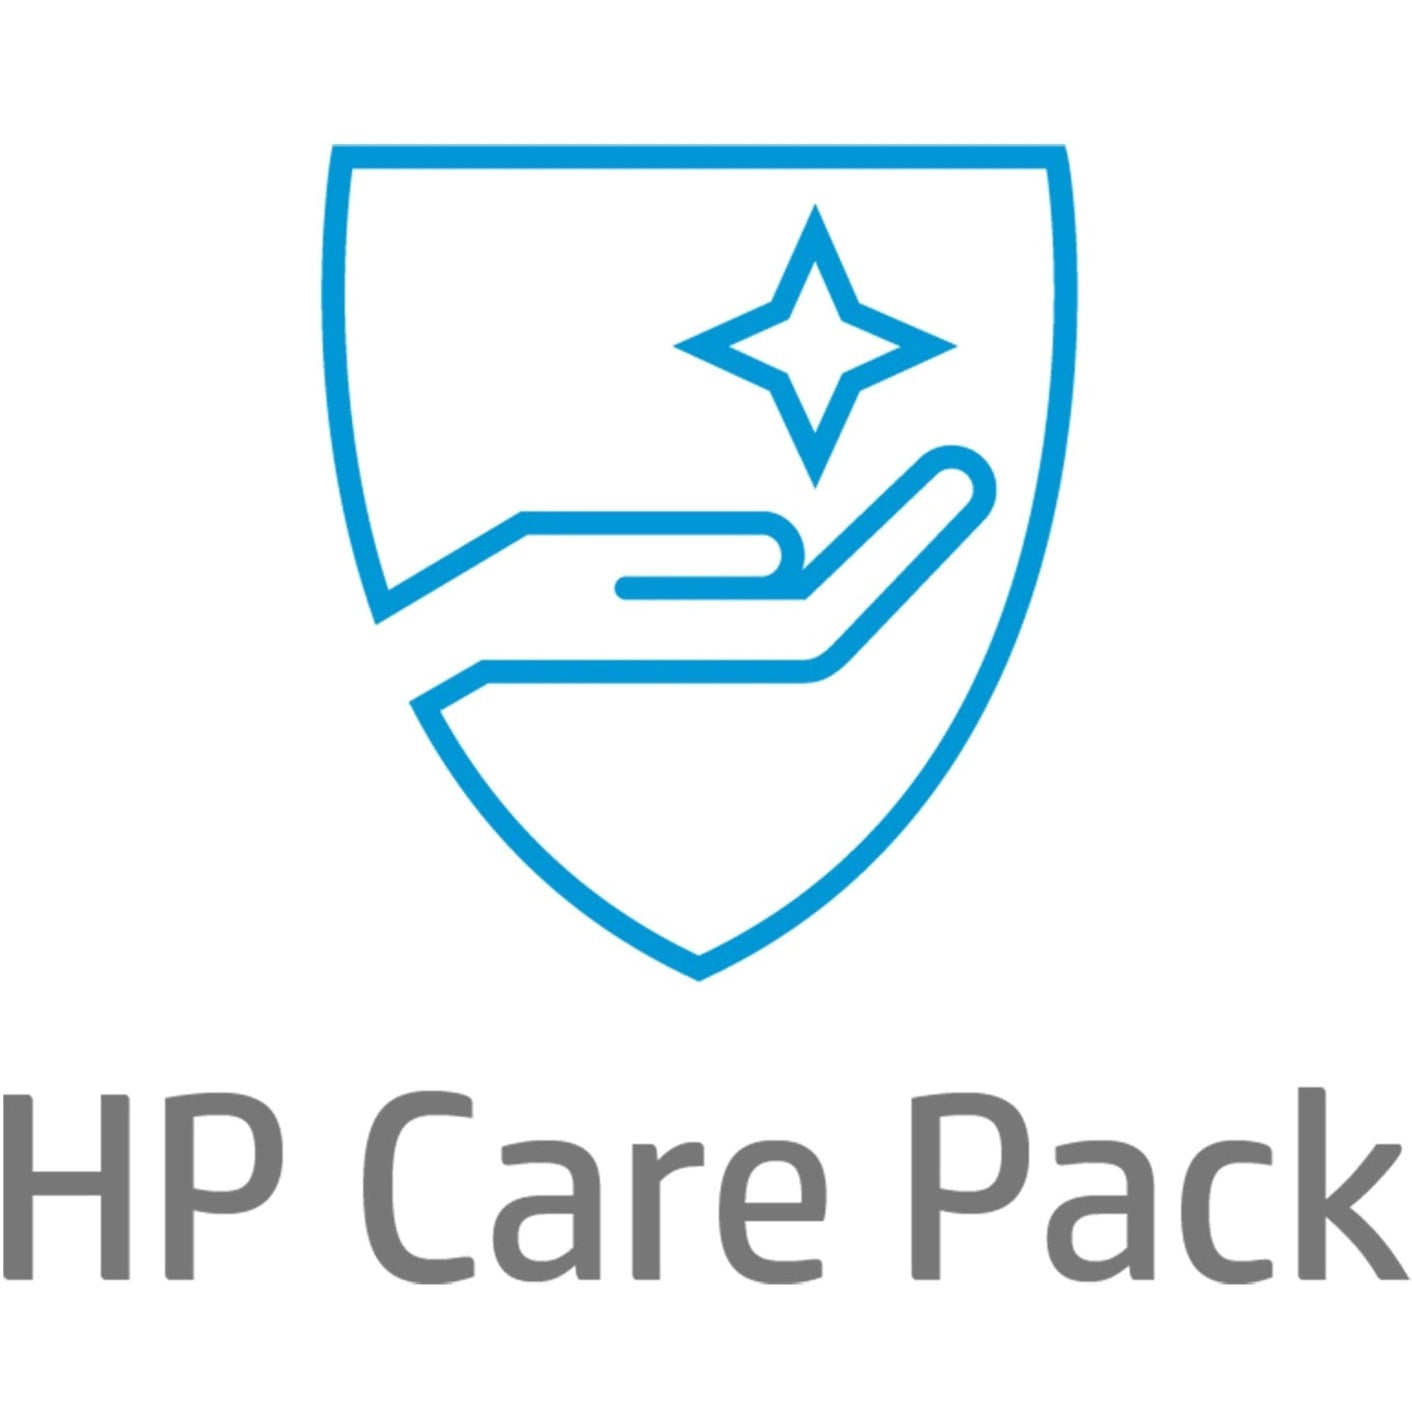 HP Care Pack - 4 Year - Service (UQ833E)